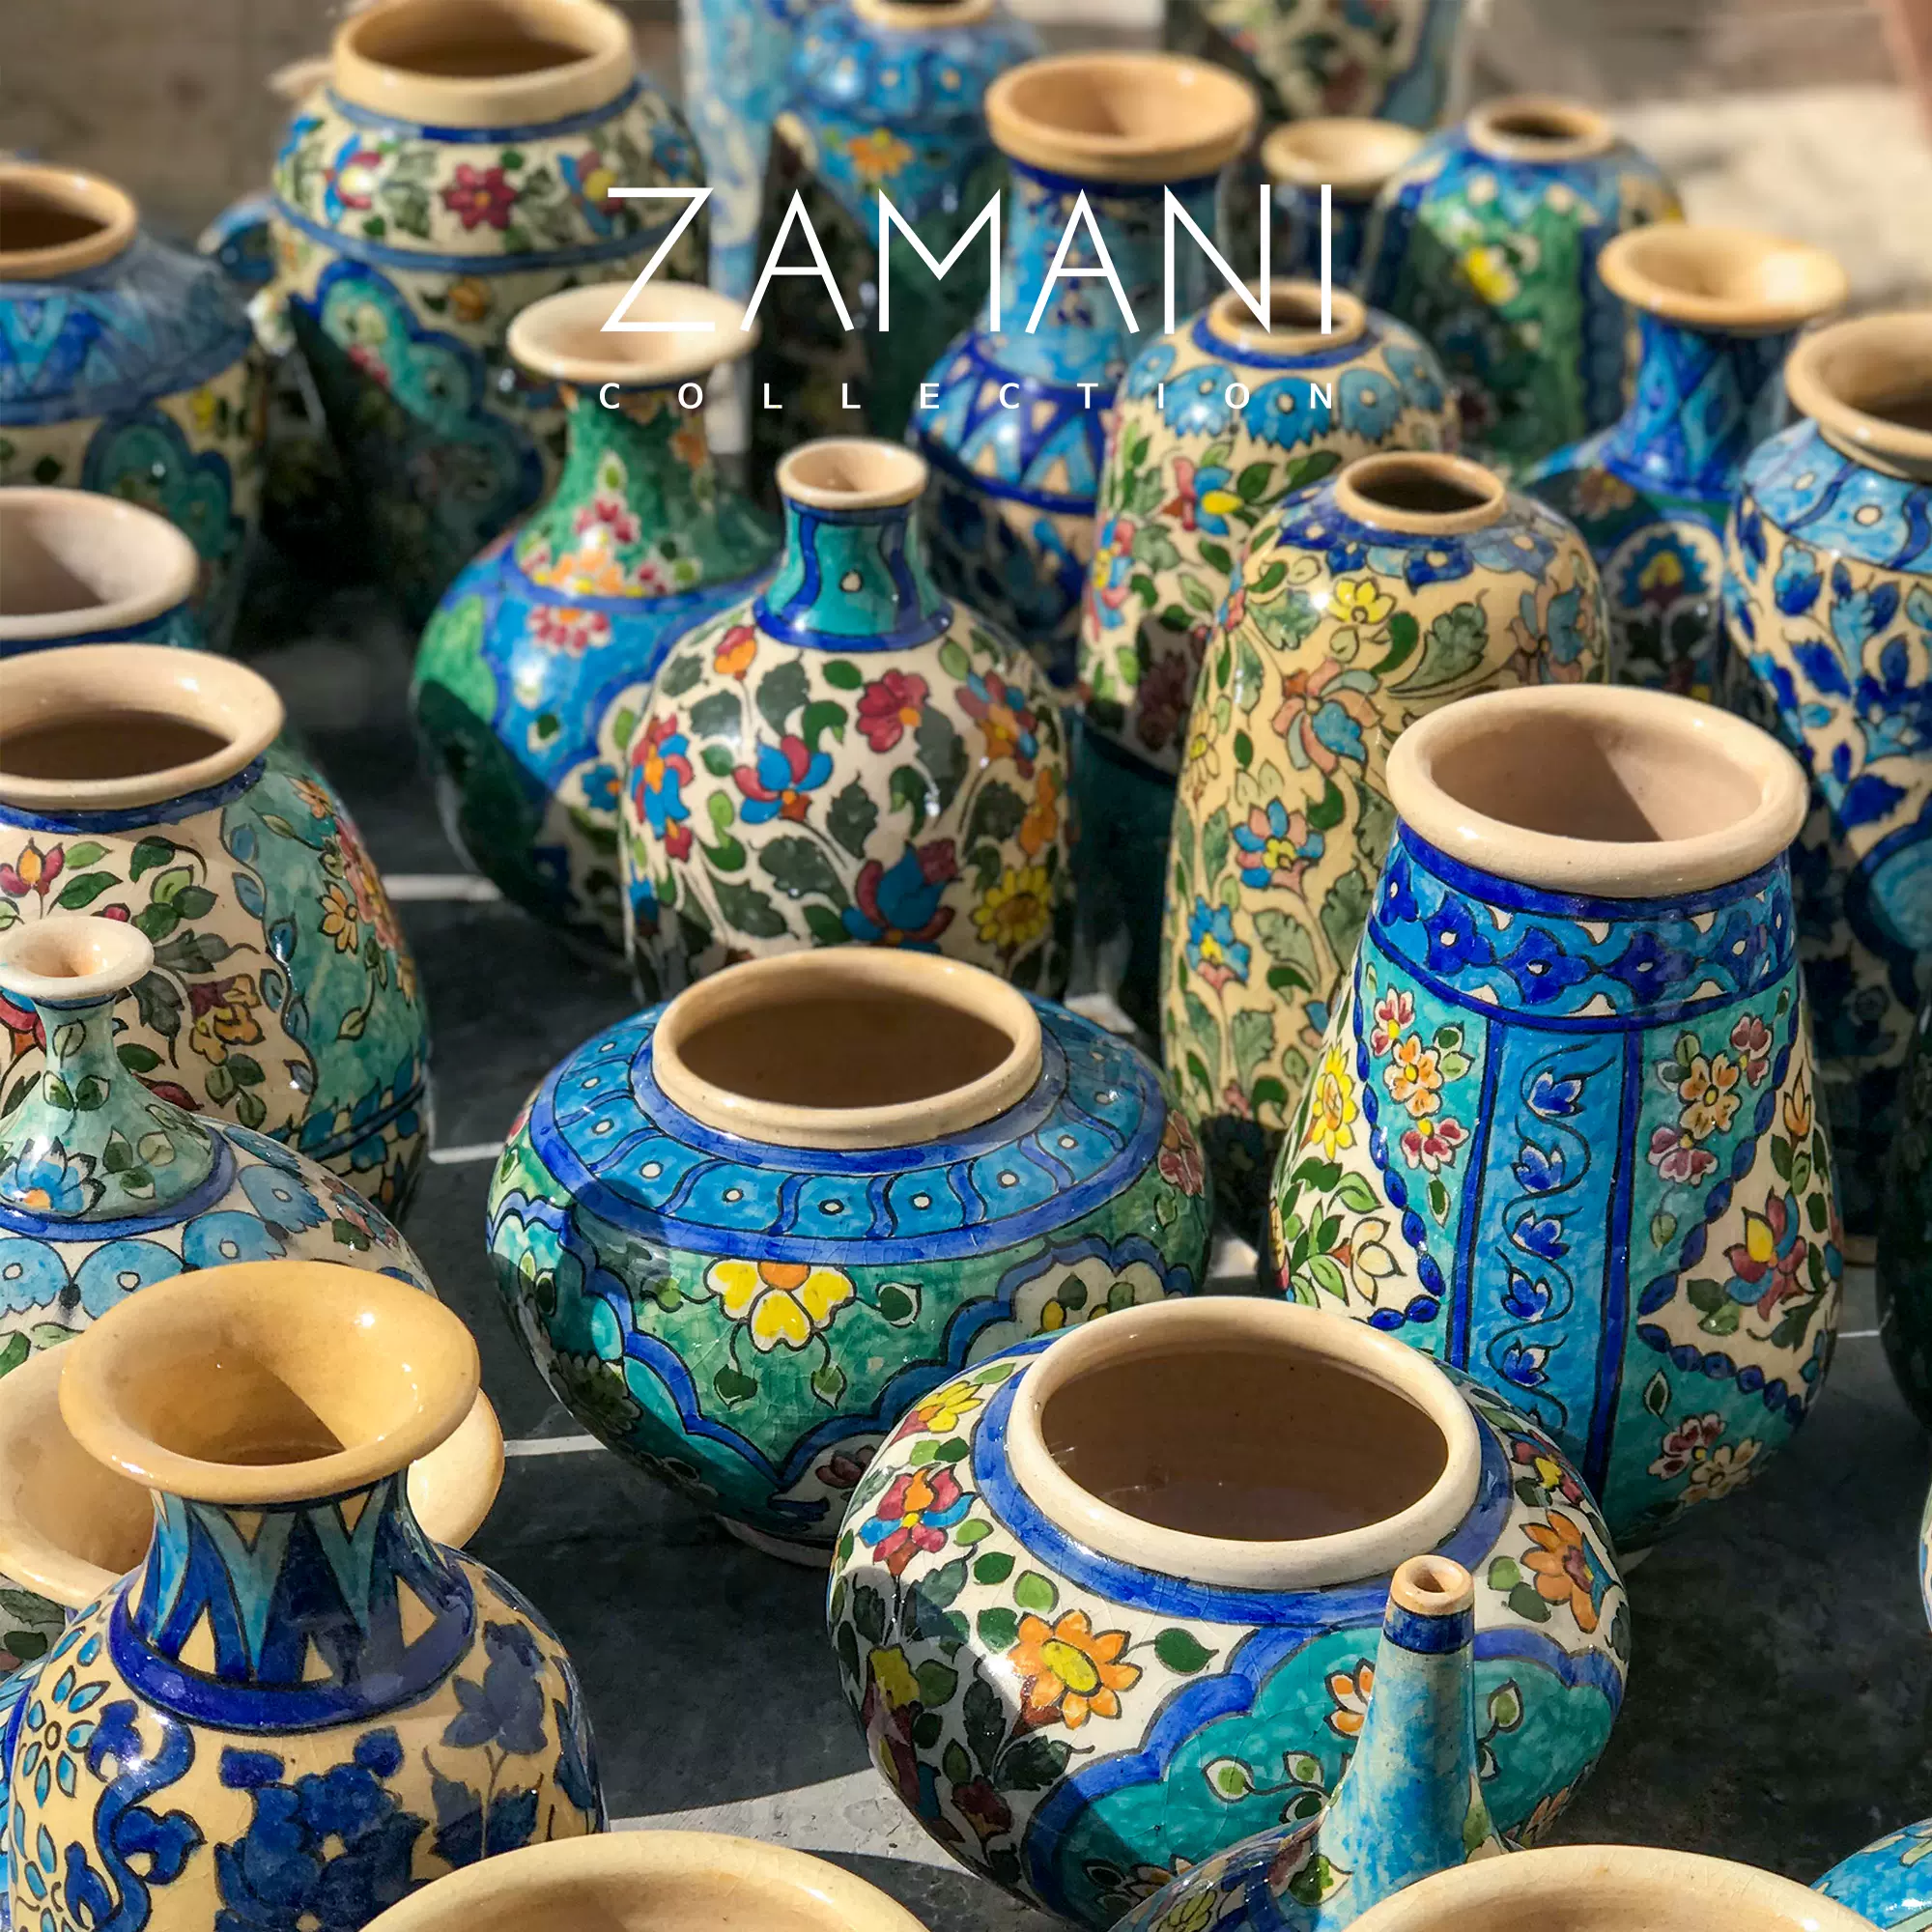 ZAMANI™伊朗手工陶瓷花瓶创意礼物波斯进口艺术品礼品复古-Taobao